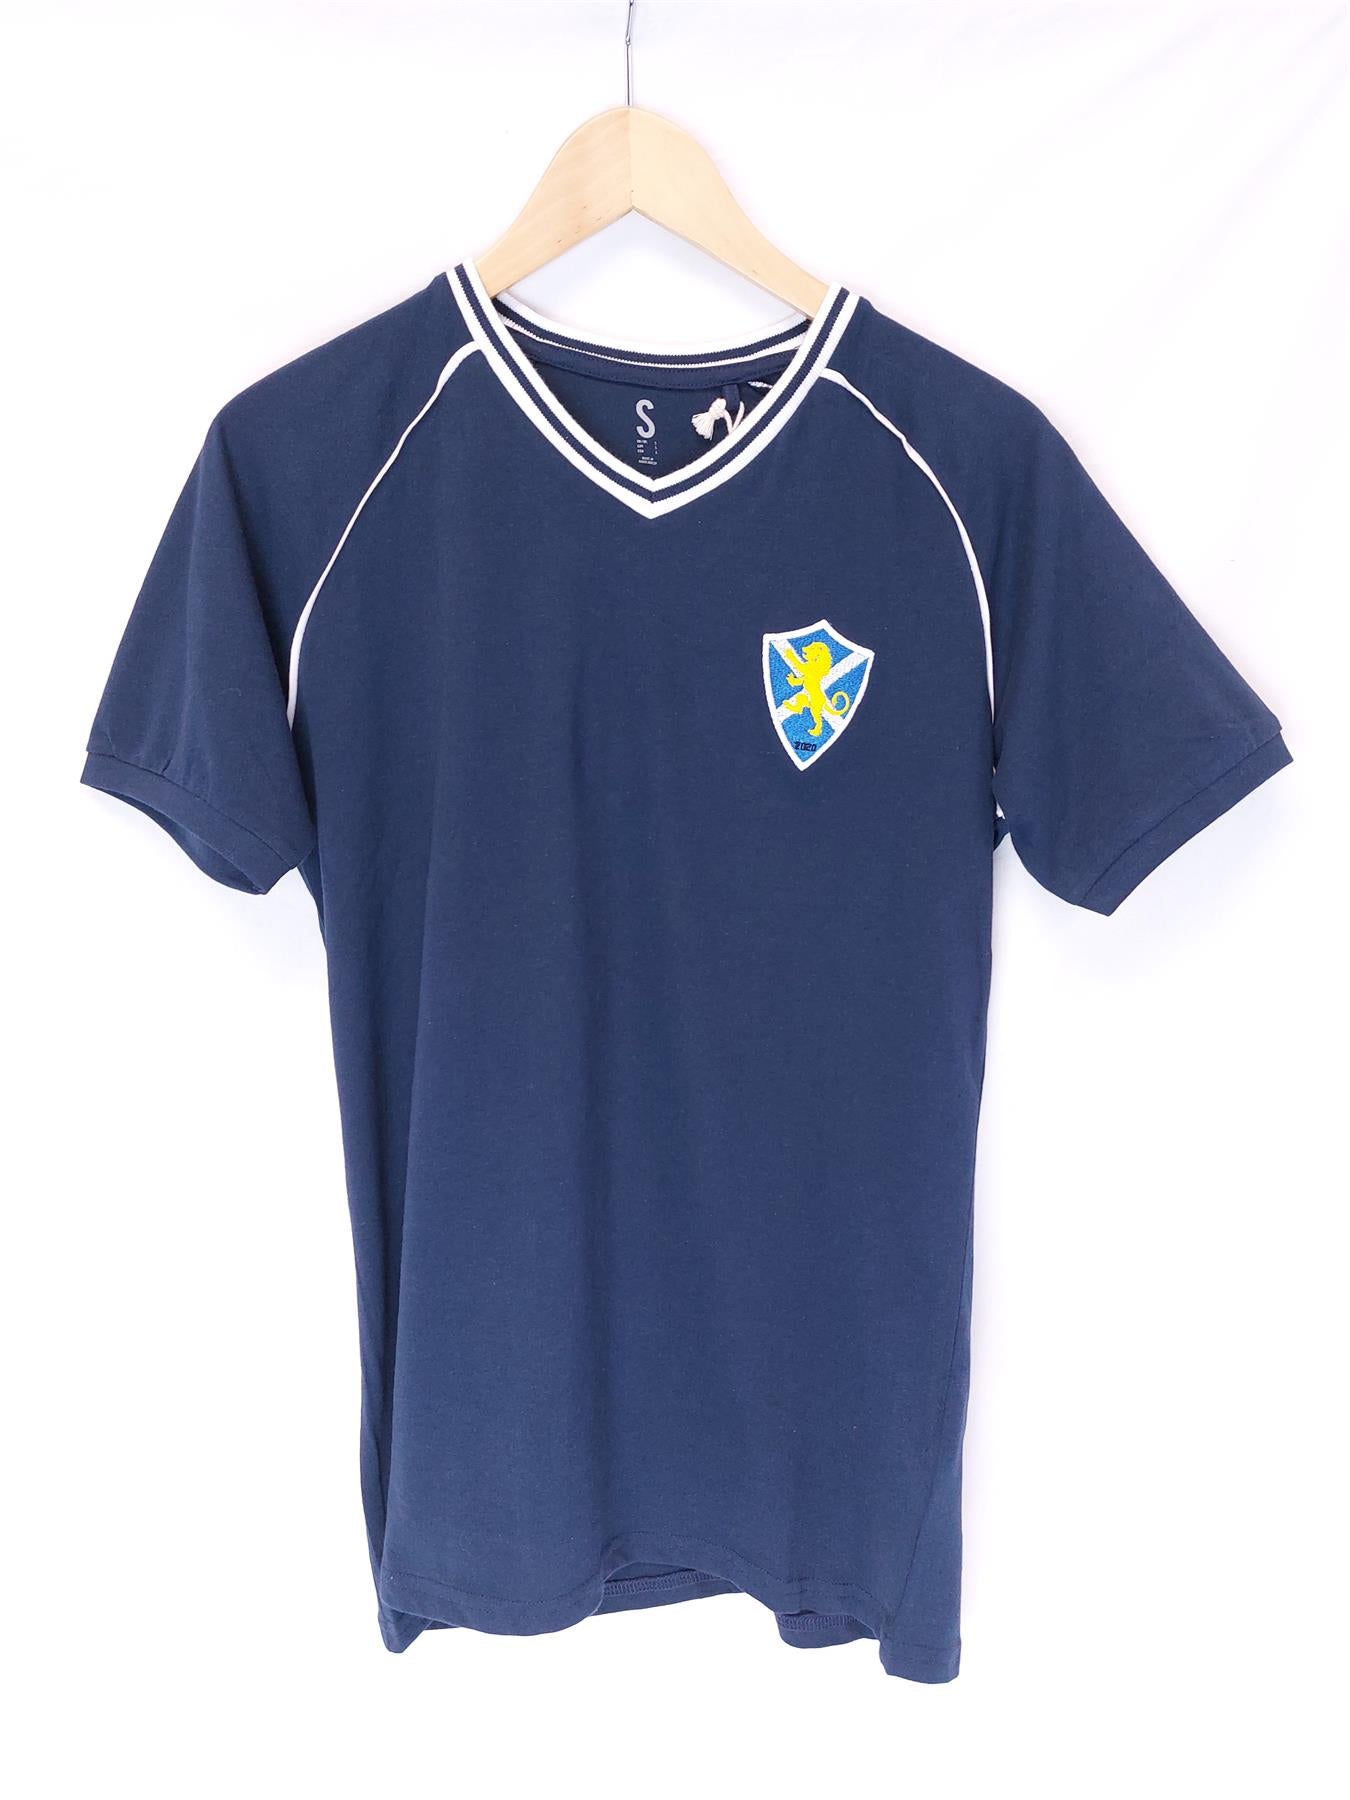 Scotland Men's Sport V-Neck T-Shirt Top Pure Cotton Unofficial Supporter Top Brand New